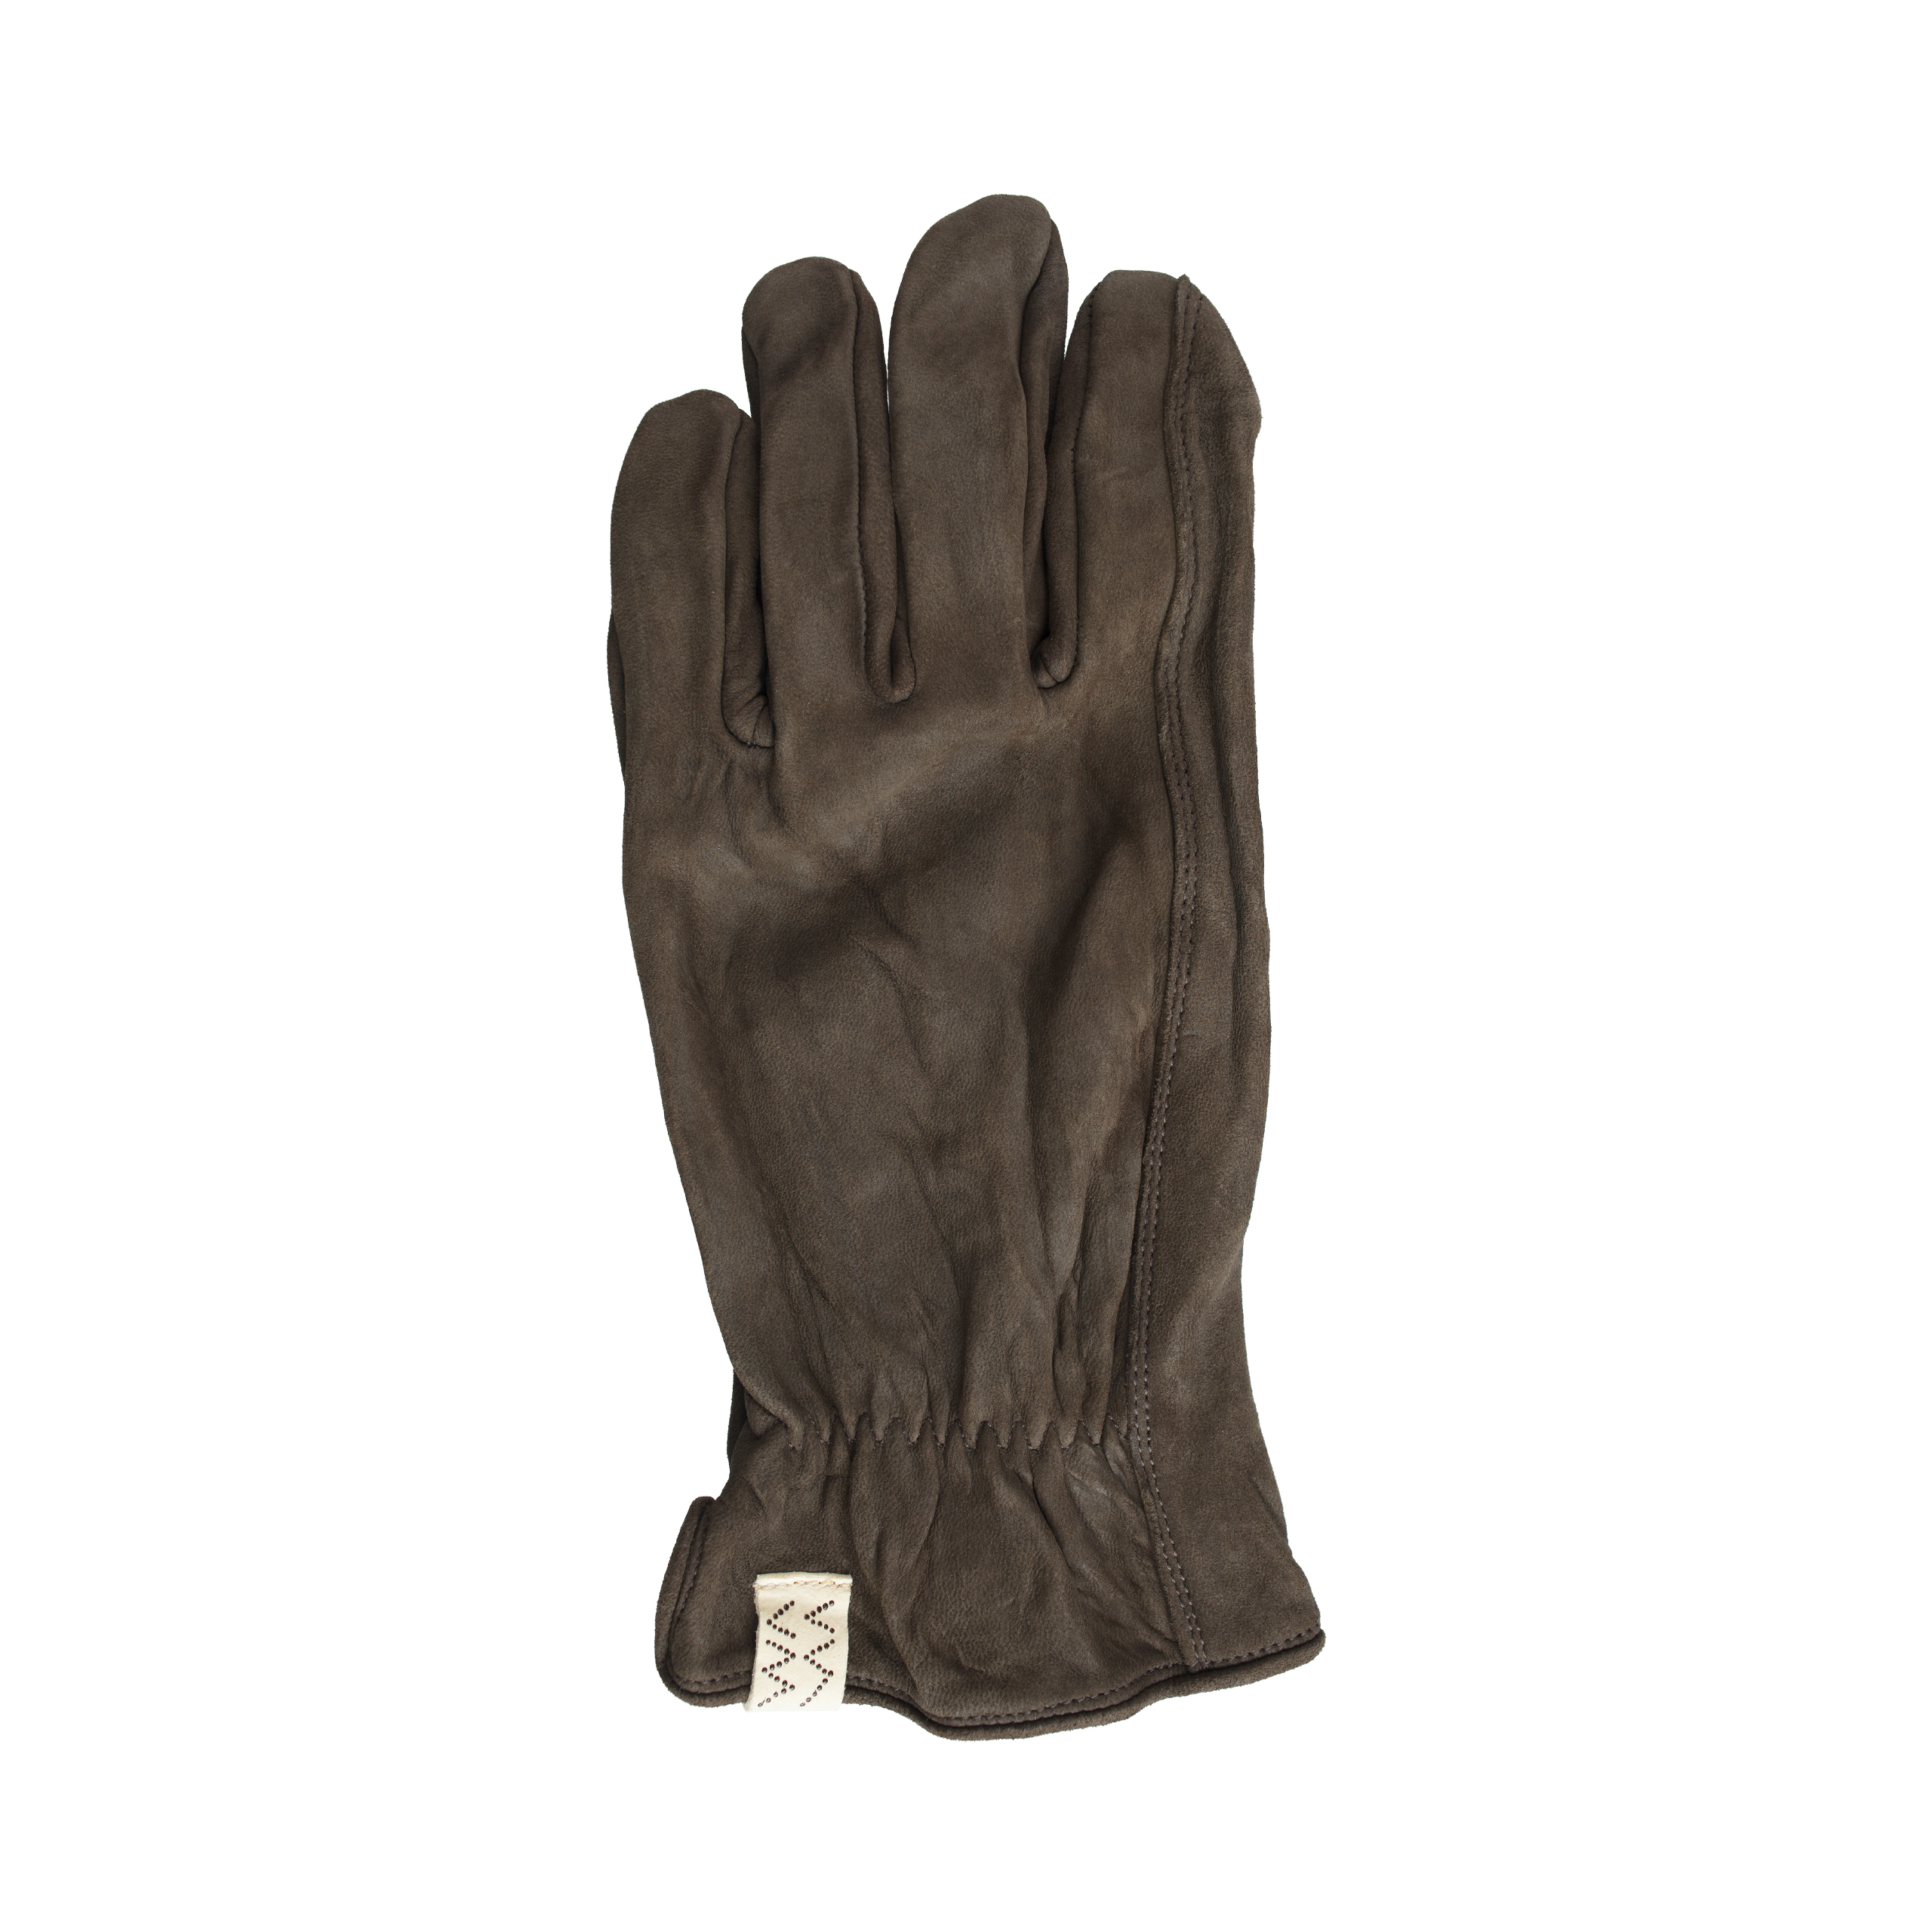 Коричневые замшевые перчатки visvim 0123203003008/DK.BROWN, размер M/L 0123203003008/DK.BROWN - фото 4